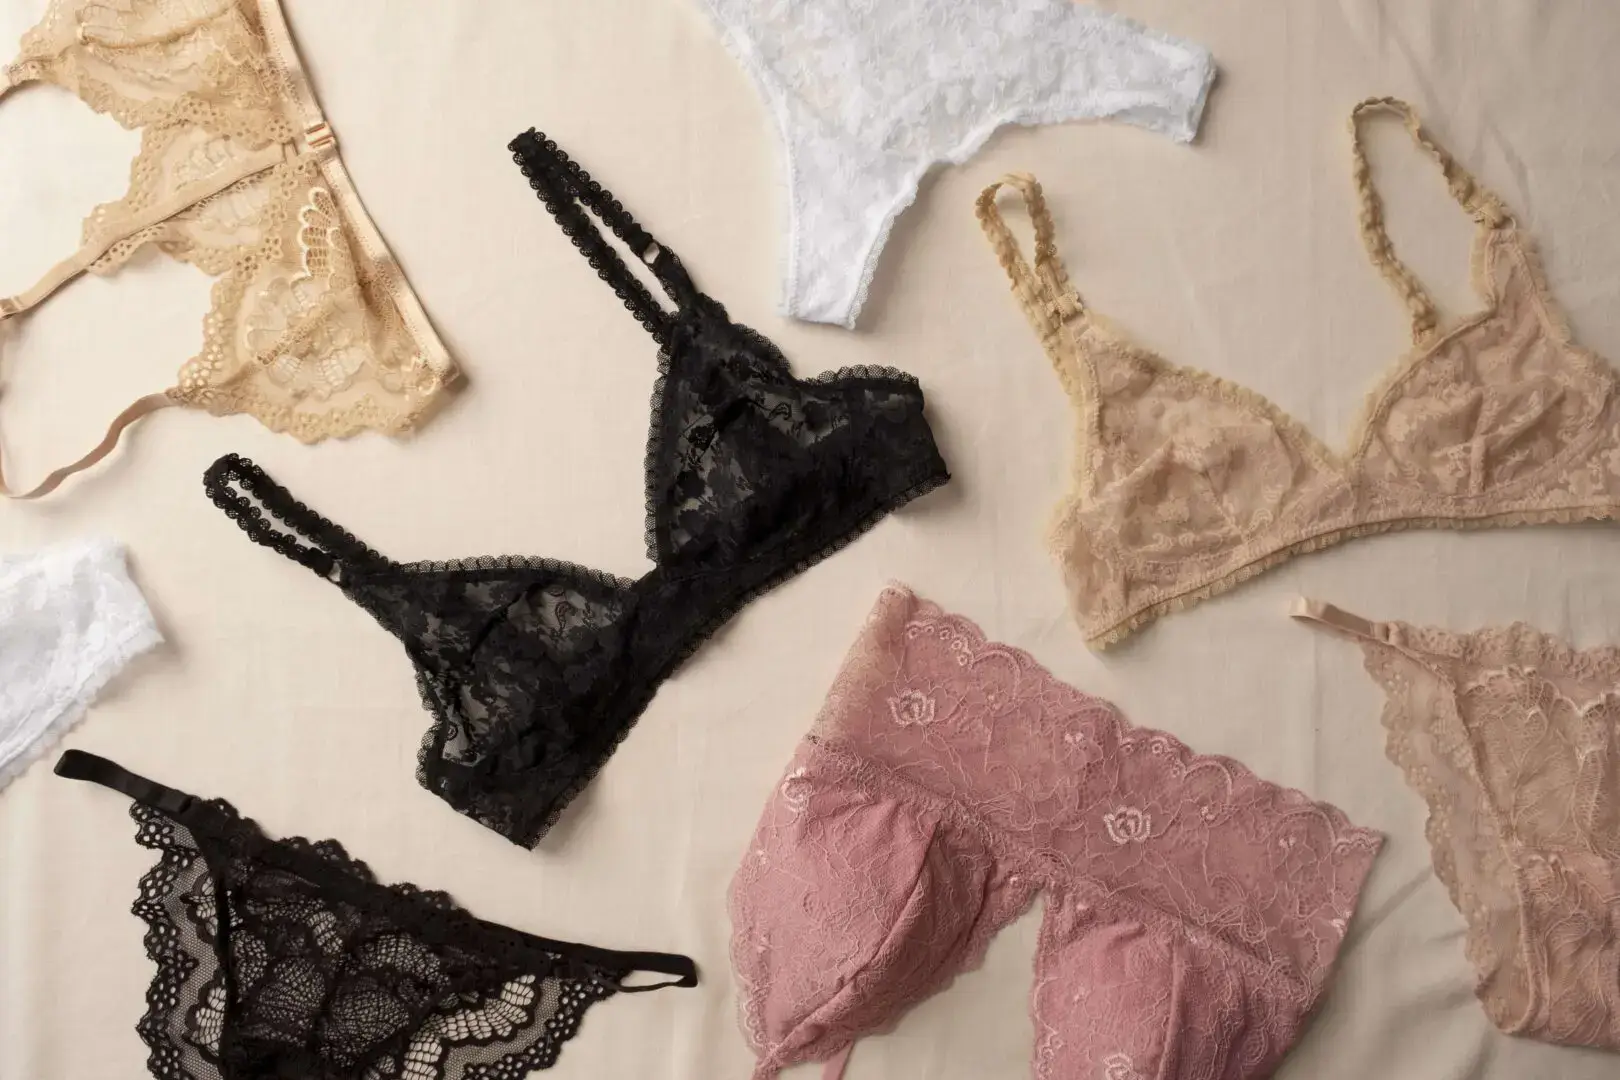 Online boutique wants to change how women buy lingerie